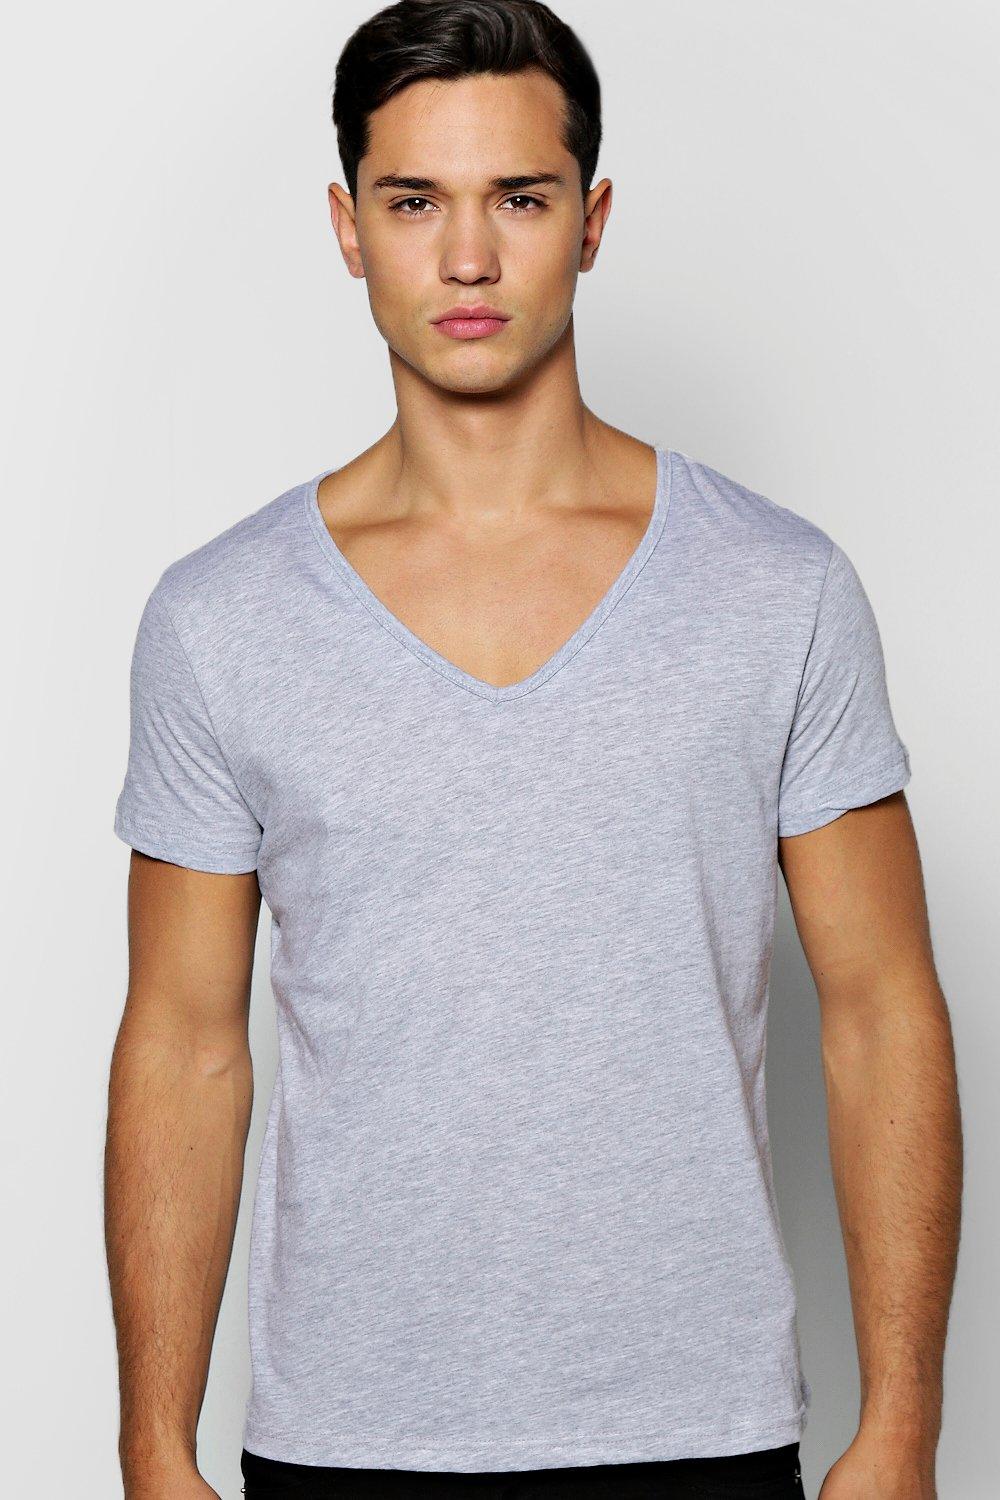 Boohoo Mens Short Sleeve Deep V Neck Waist Length Top T Shirt MD1B | eBay